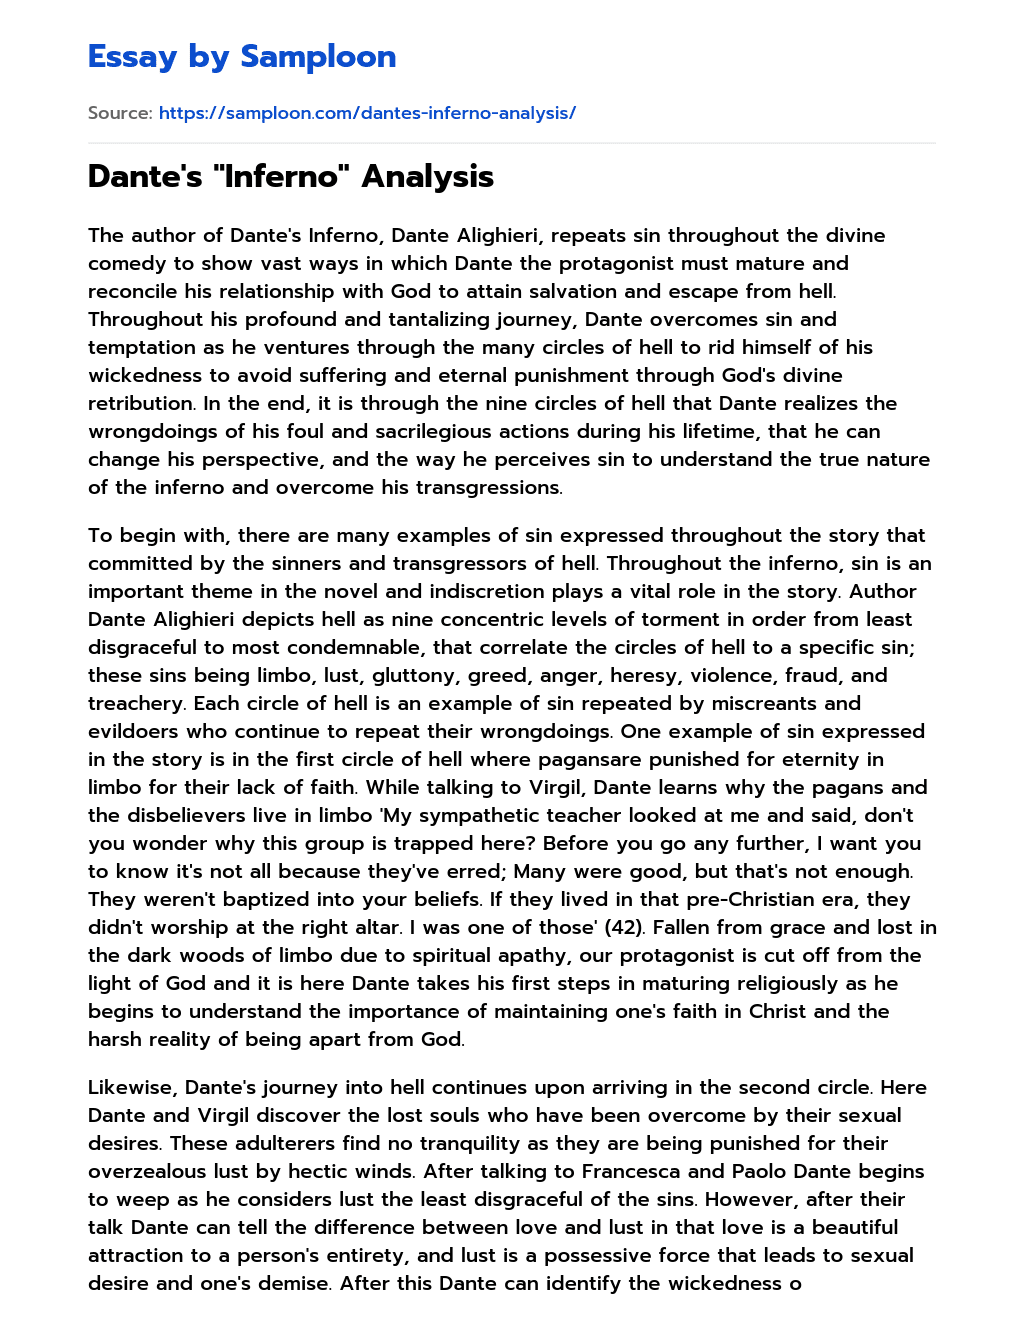 Dante’s “Inferno” Analysis essay